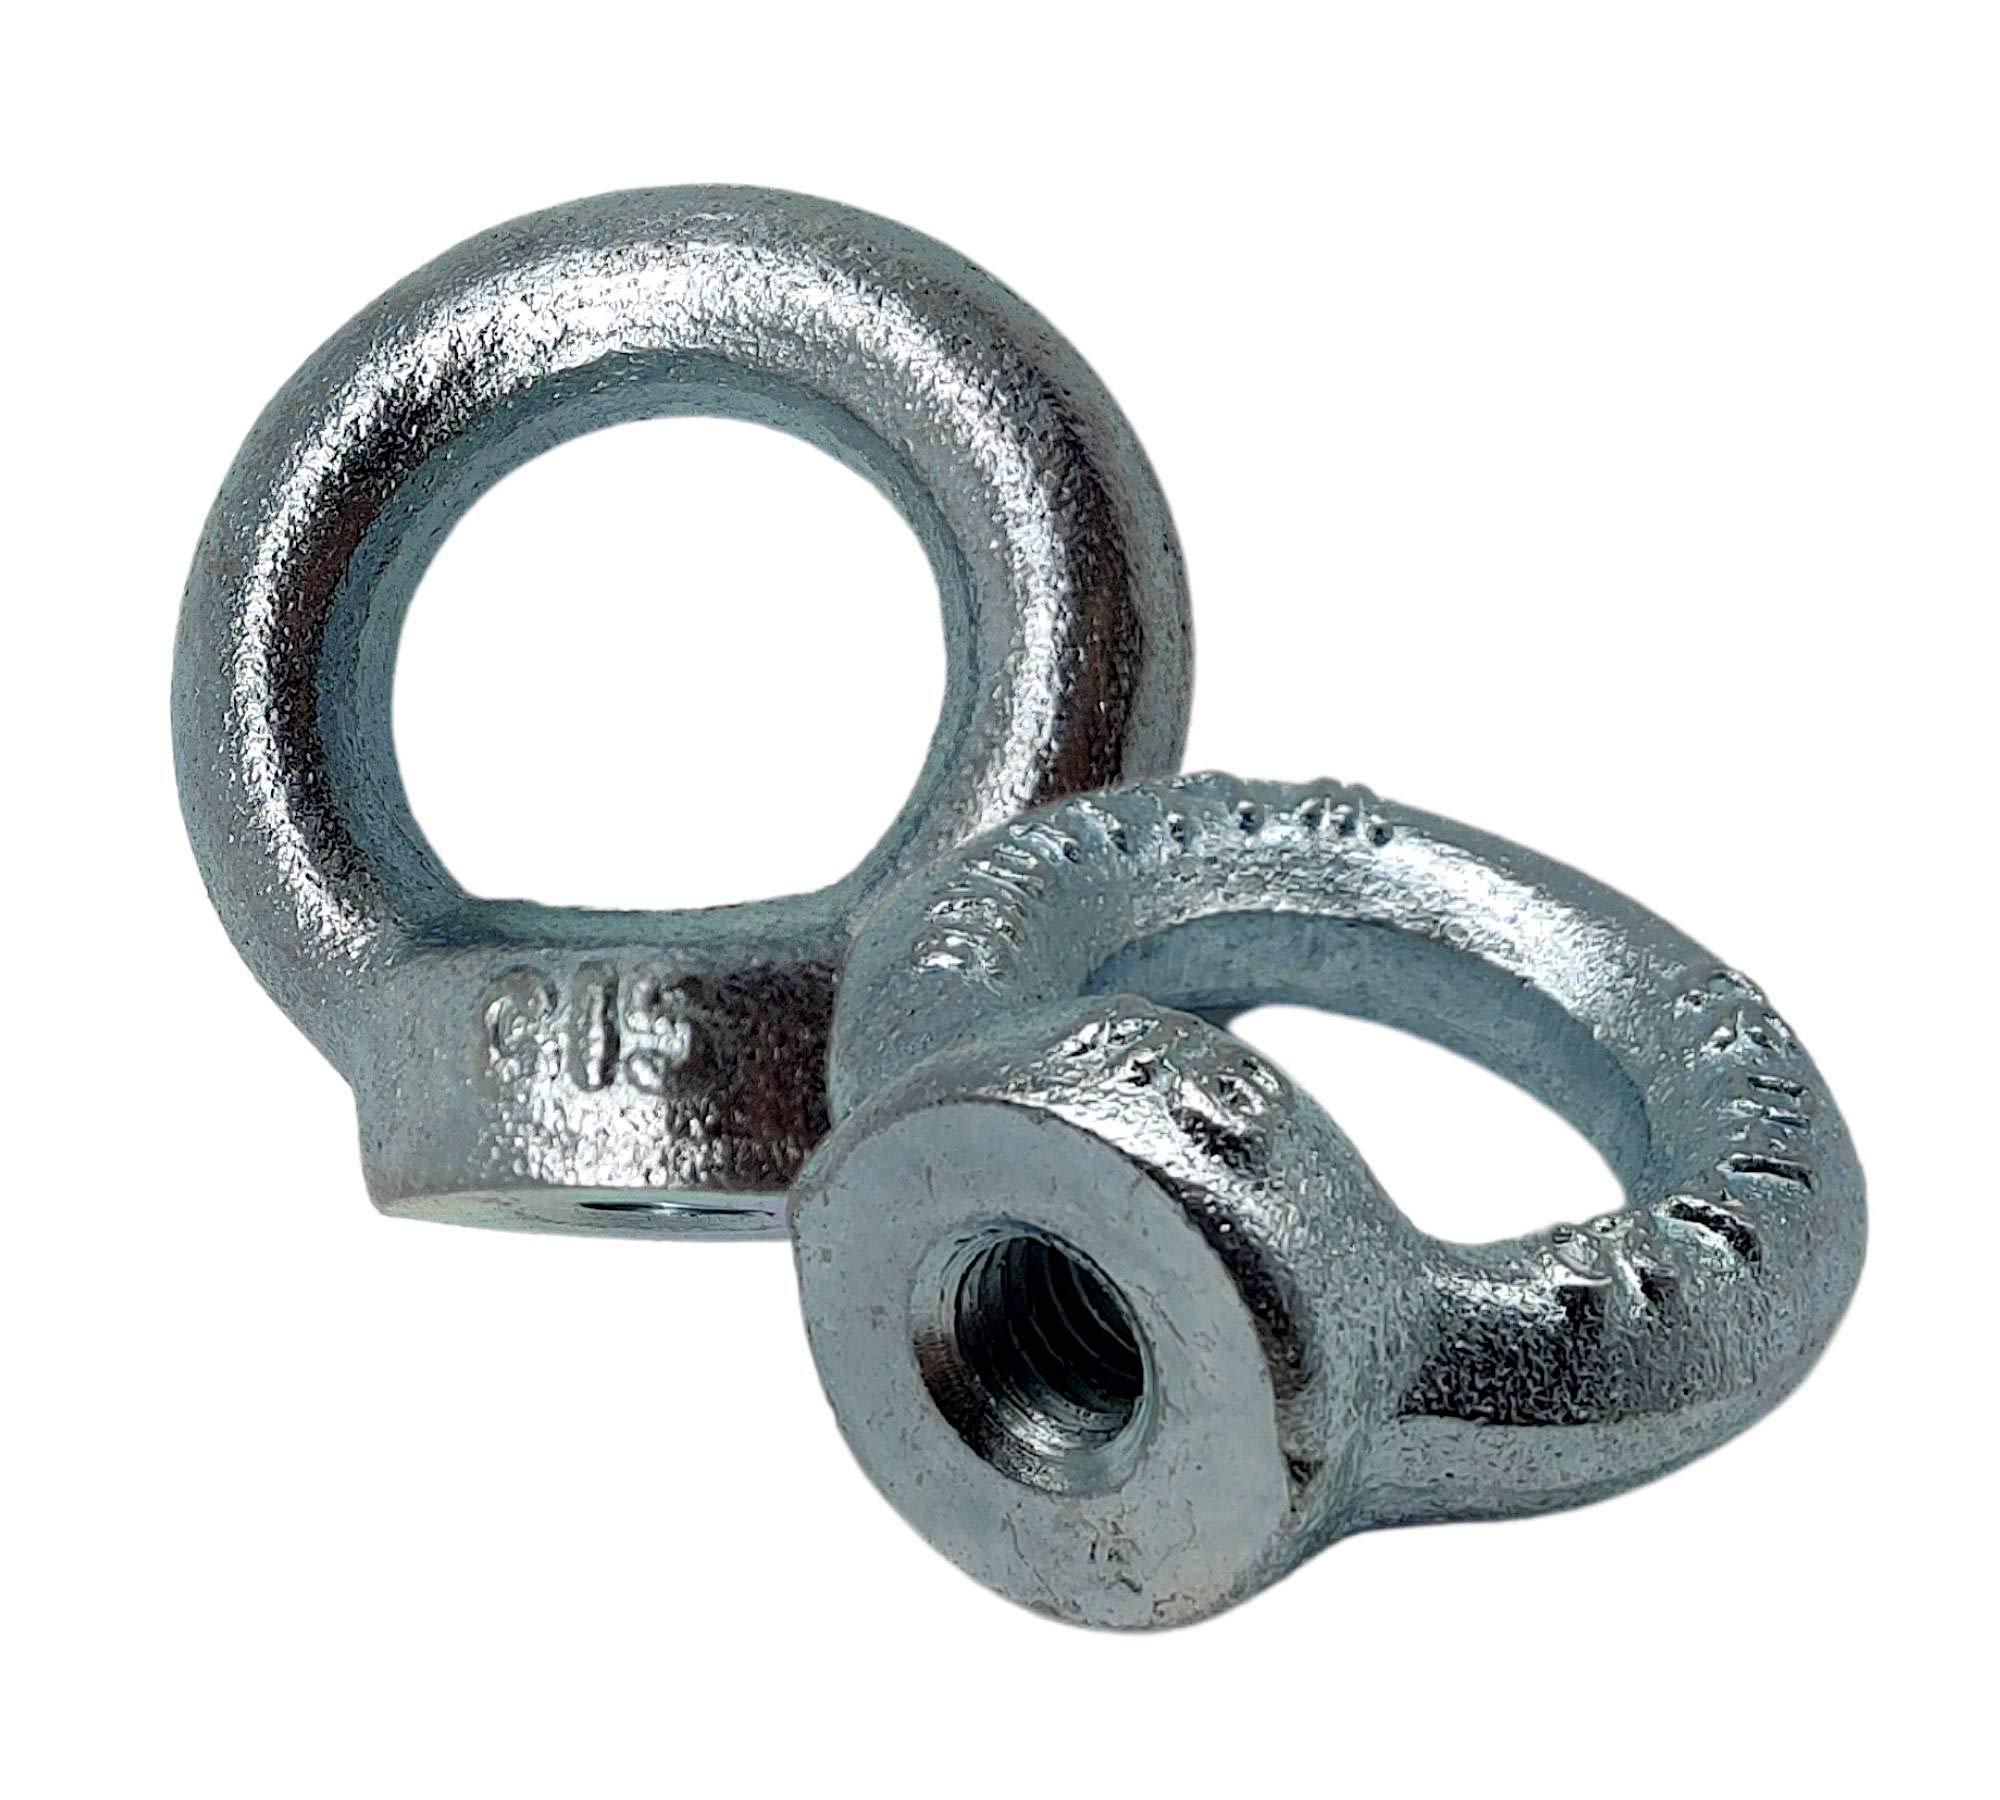 images-eye-nut-bolts-for-lifting-galvanized-fasteners-eye-bolts-welded-cyprus-thessaloniki-orestiada-volos-larisa-synodinos-mapa-thyliki-naytiliaka-eidi-stamperia-carcano